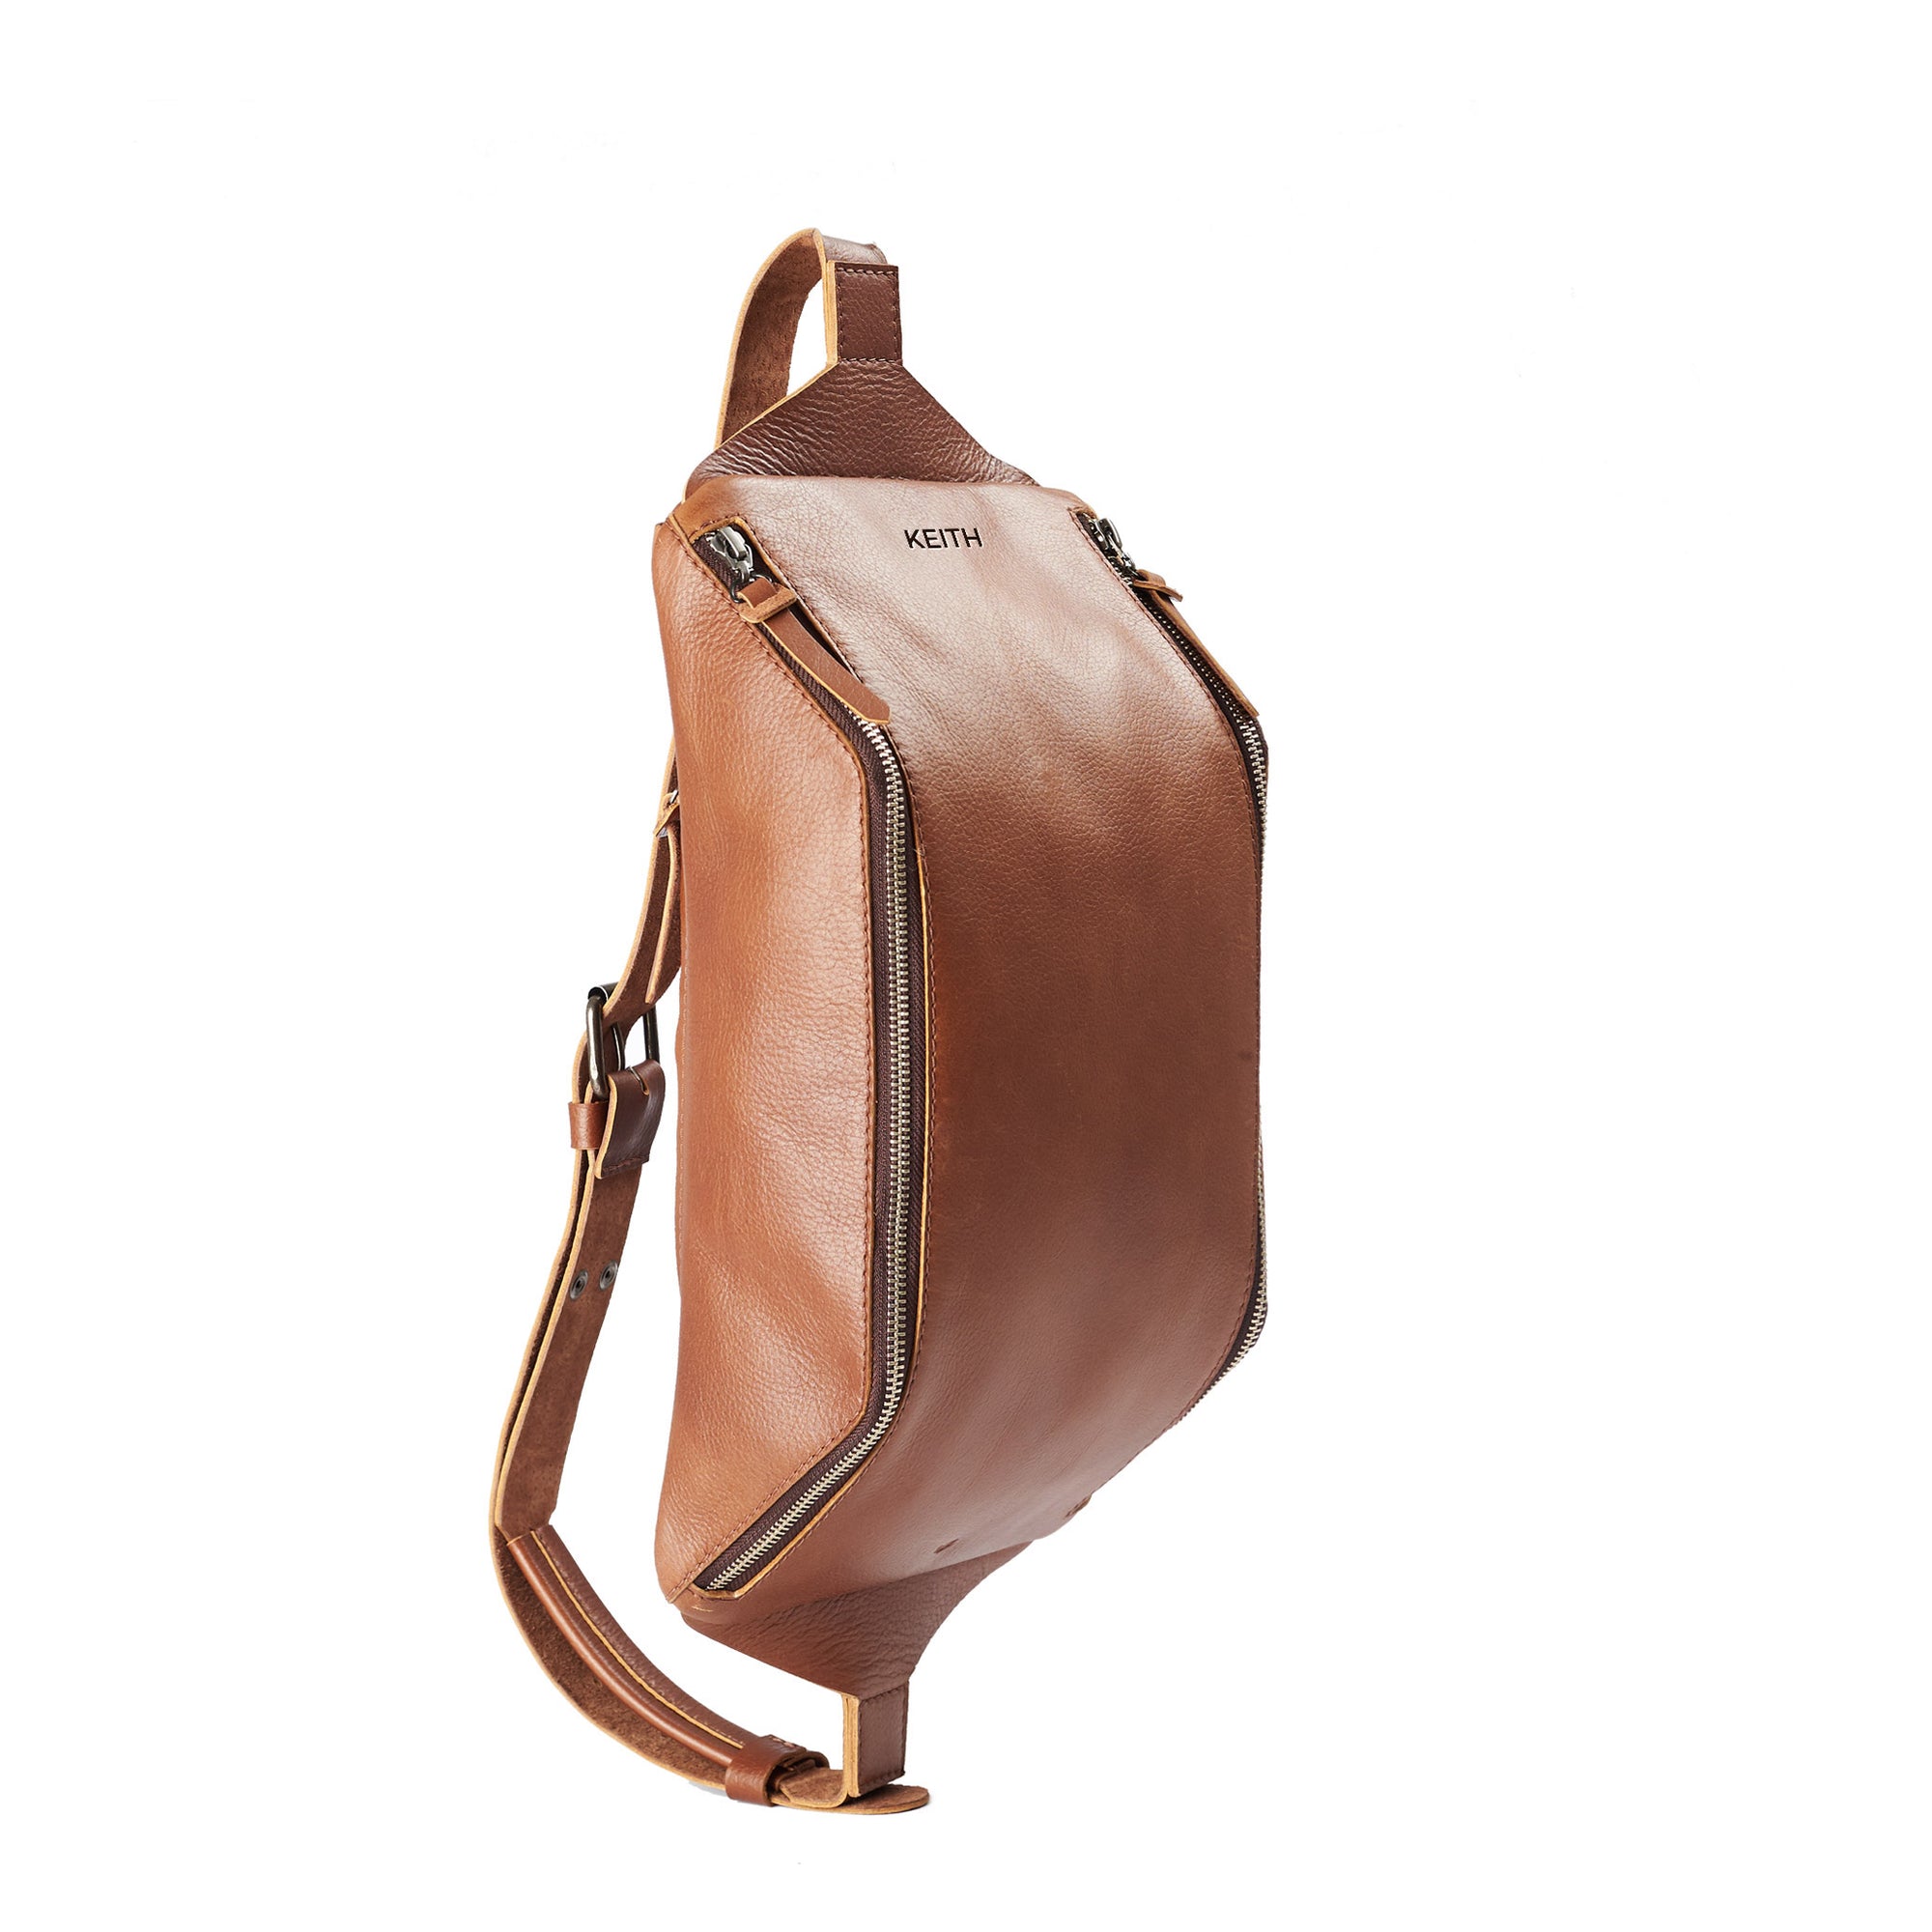 Engraving detail. Tan Fenek sling bag backpack made by Capra Leather. Styling of over the shoulder festival bicycle bag.